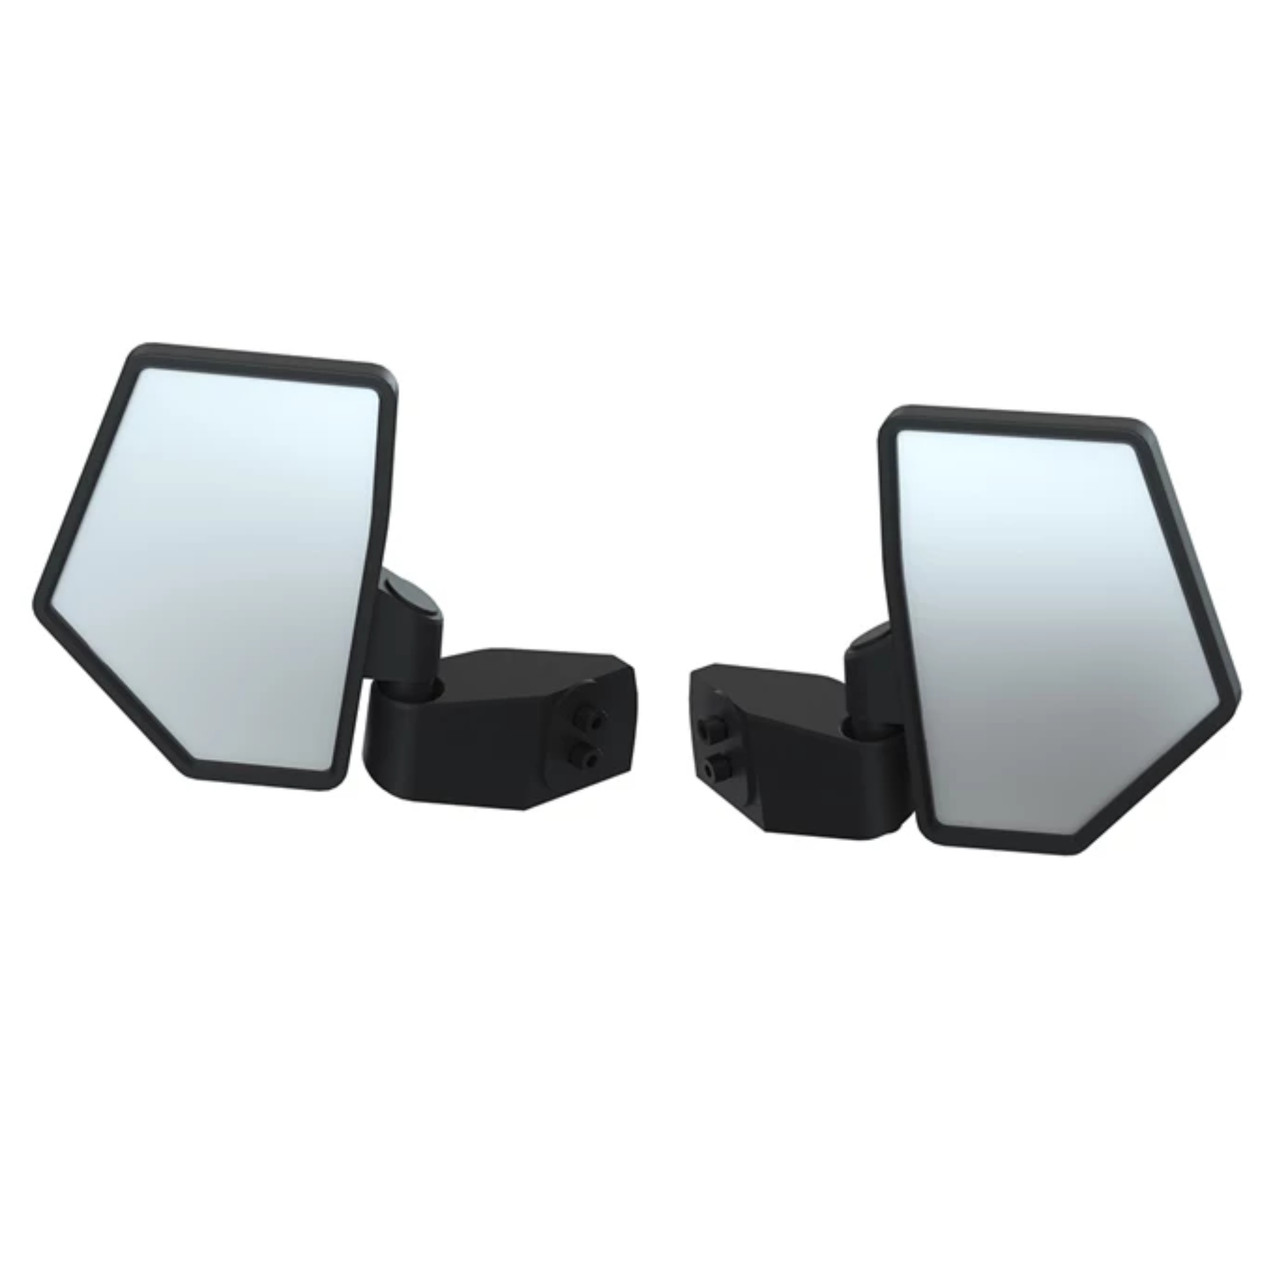 Polaris New OEM Side View Mirrors, 2889241